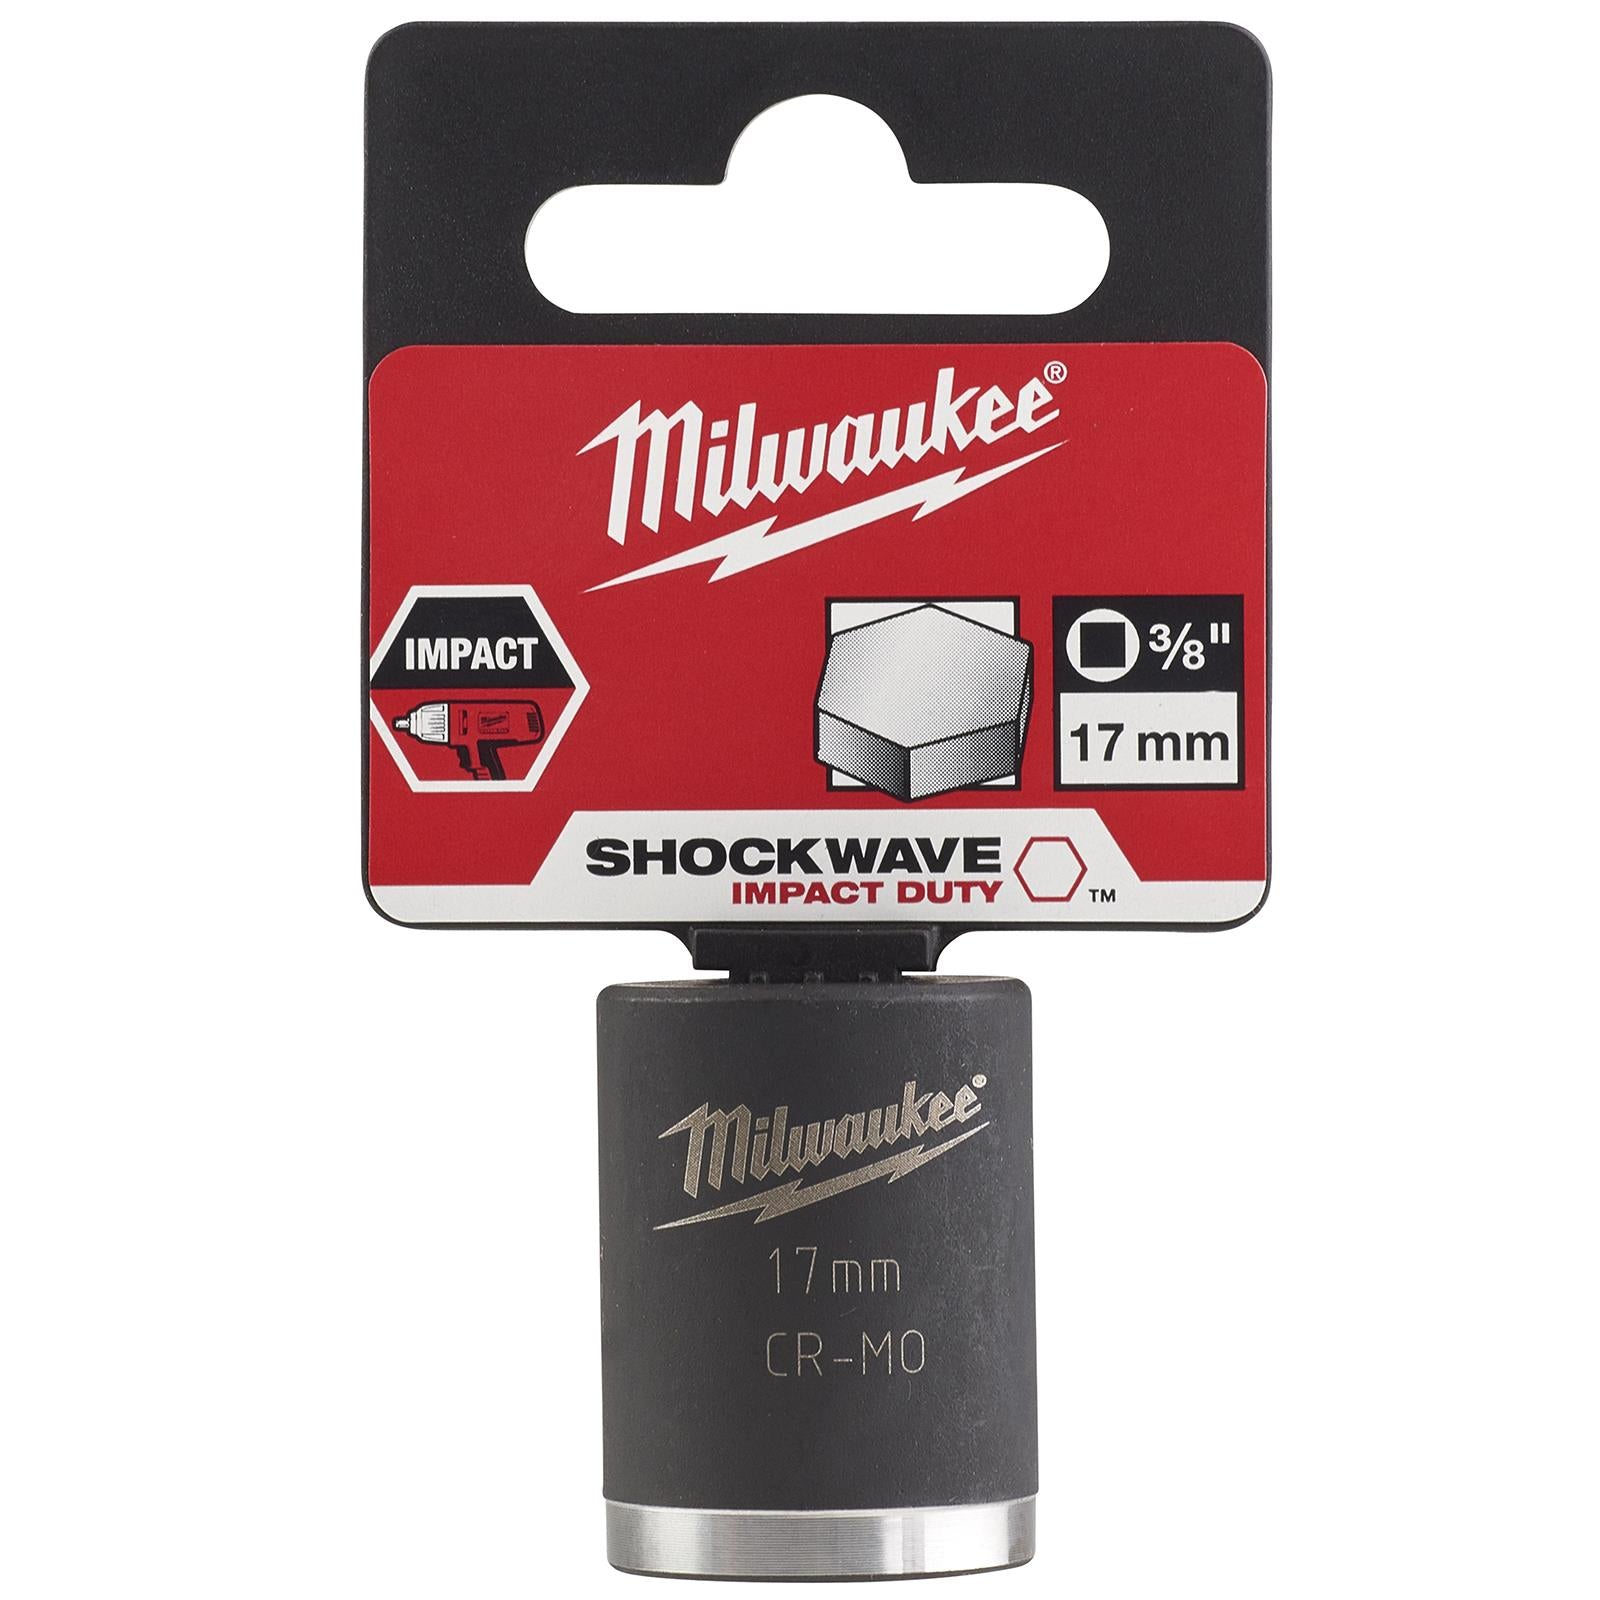 Milwaukee Impact Sockets 3/8" Drive Shockwave Impact Duty